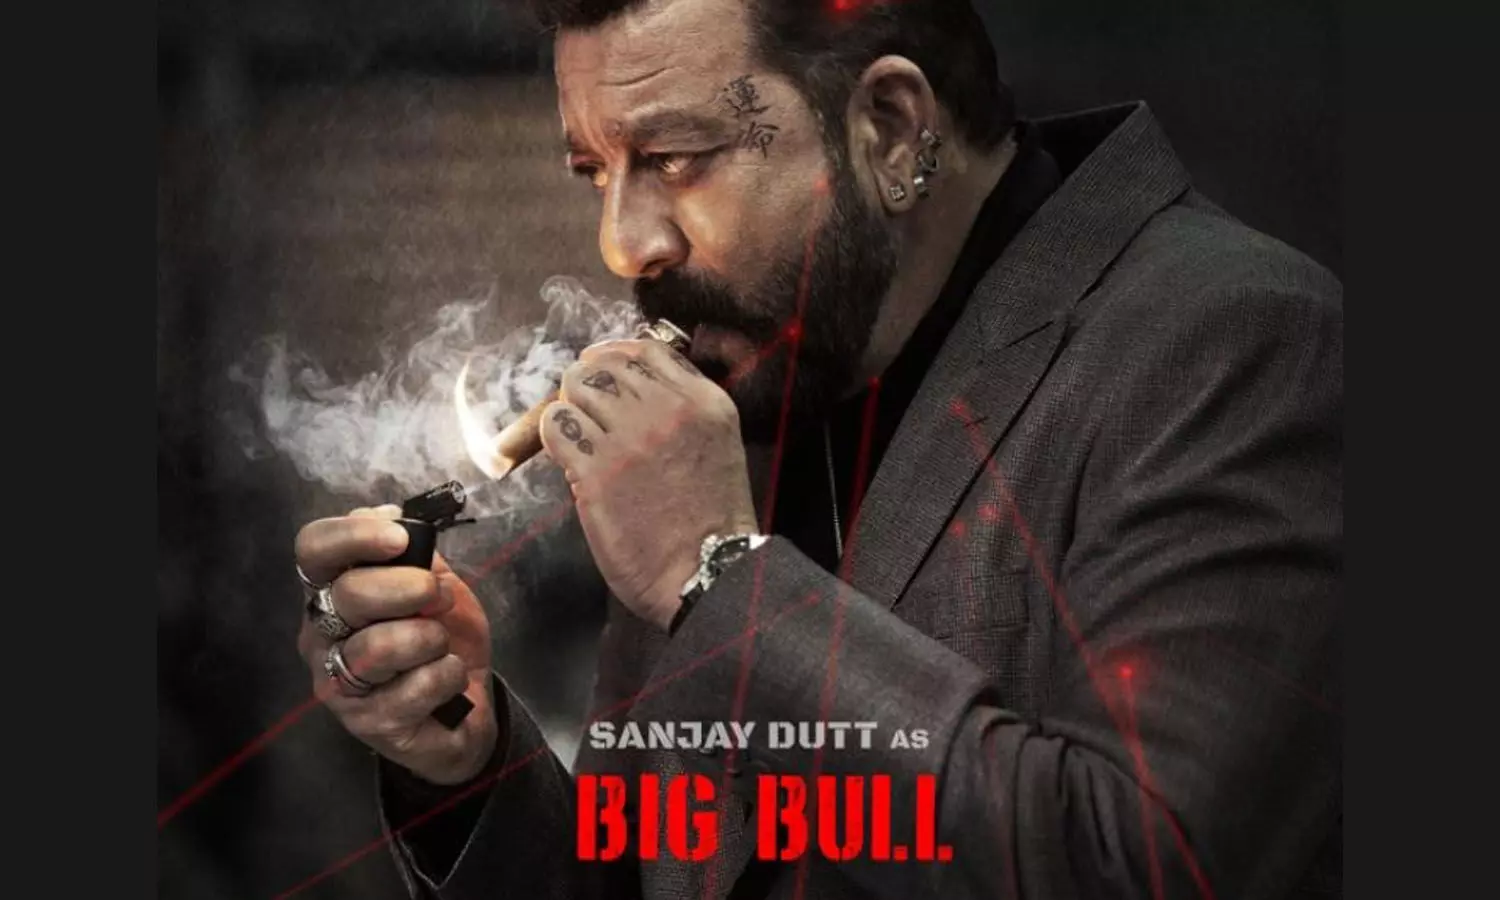 Sanjay Dutt as Big Bull in Puri Jagannaths Double iSmart with Ram Pothineni